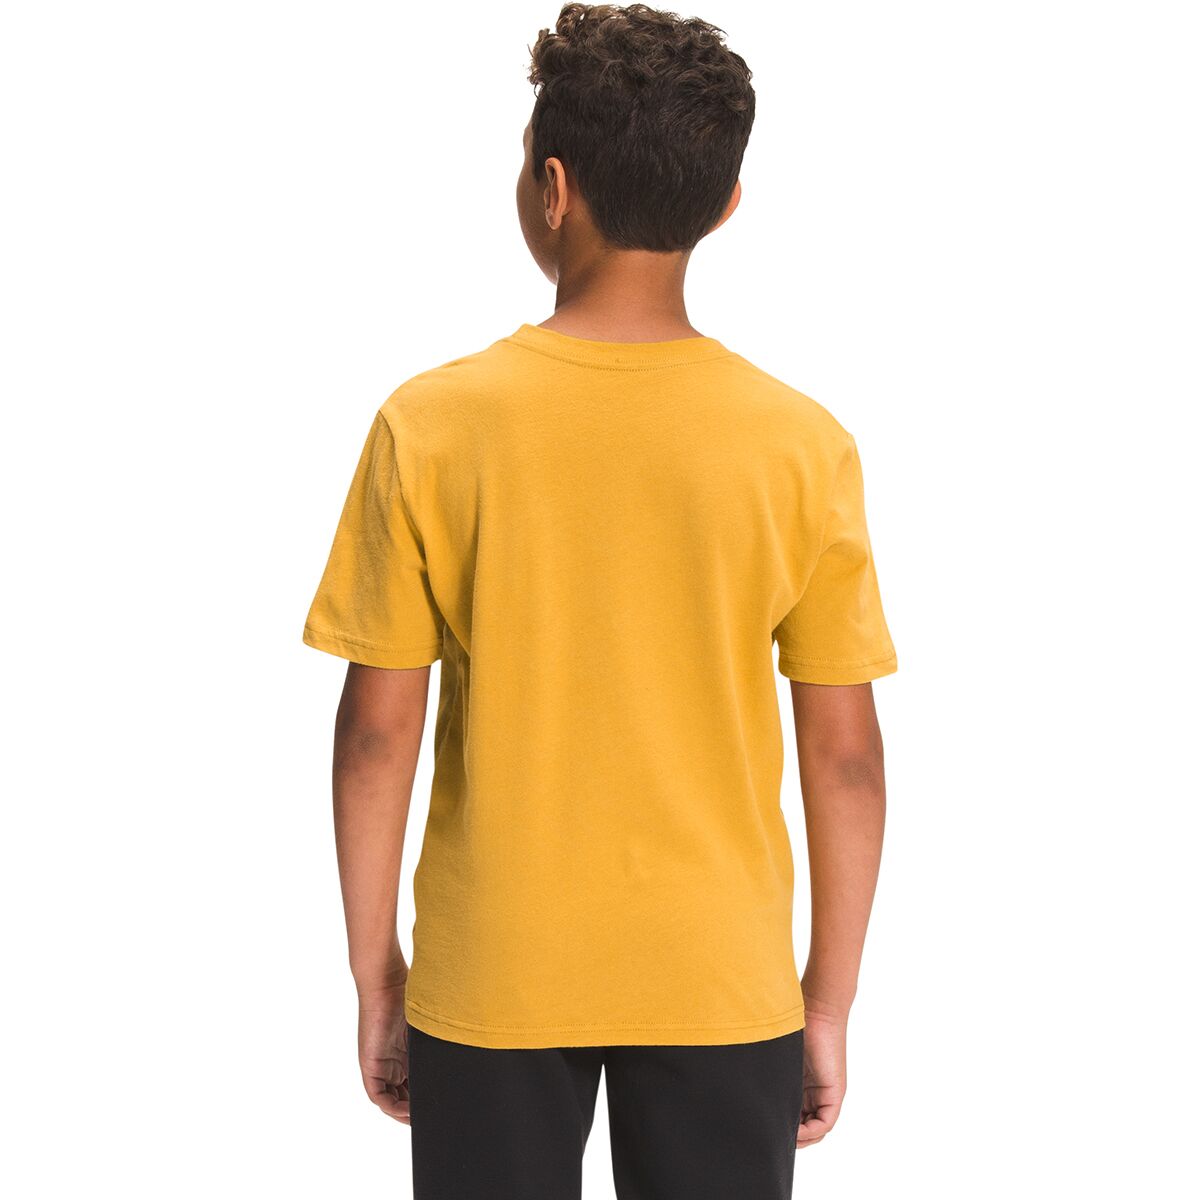 Graphic T-Shirt - Short-Sleeve - Boys'